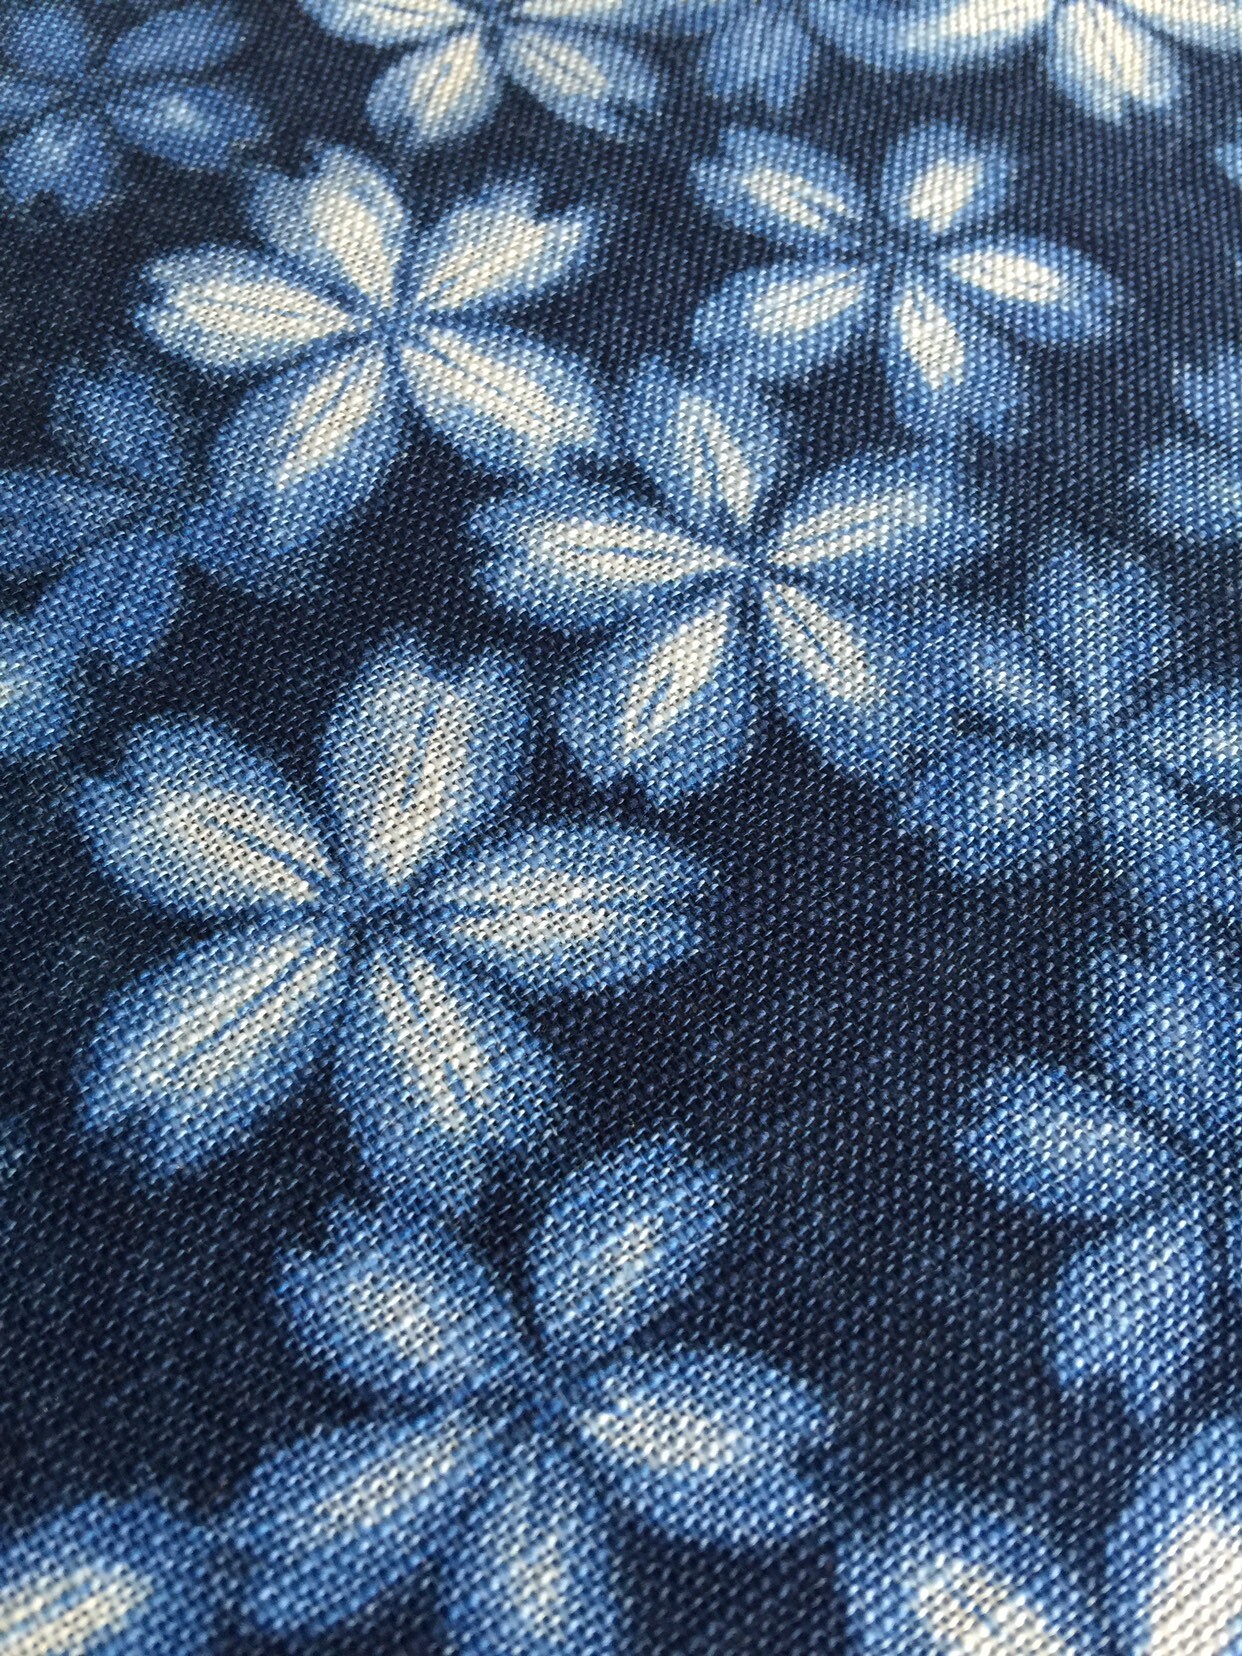 Kokka shibori cherry blossoms sakura stars Japanese cotton fabric LGA-36080-4-A navy blue